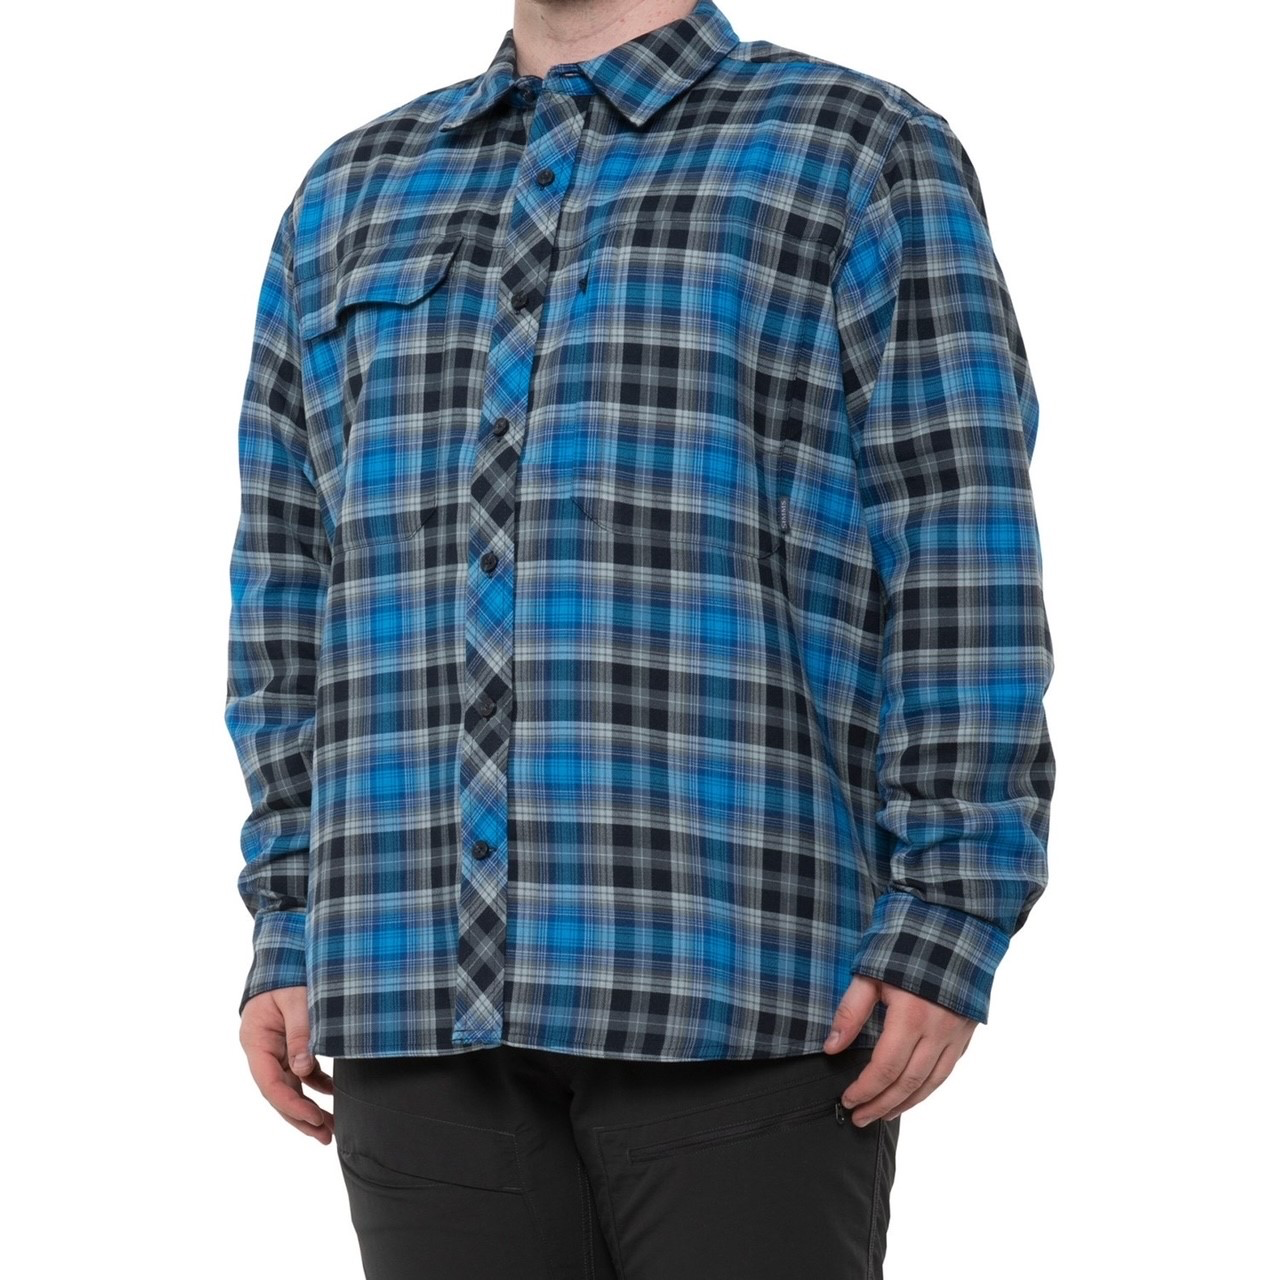 Simms M's Guide Flannel Shirt - Admiral Blue Plaid - Large